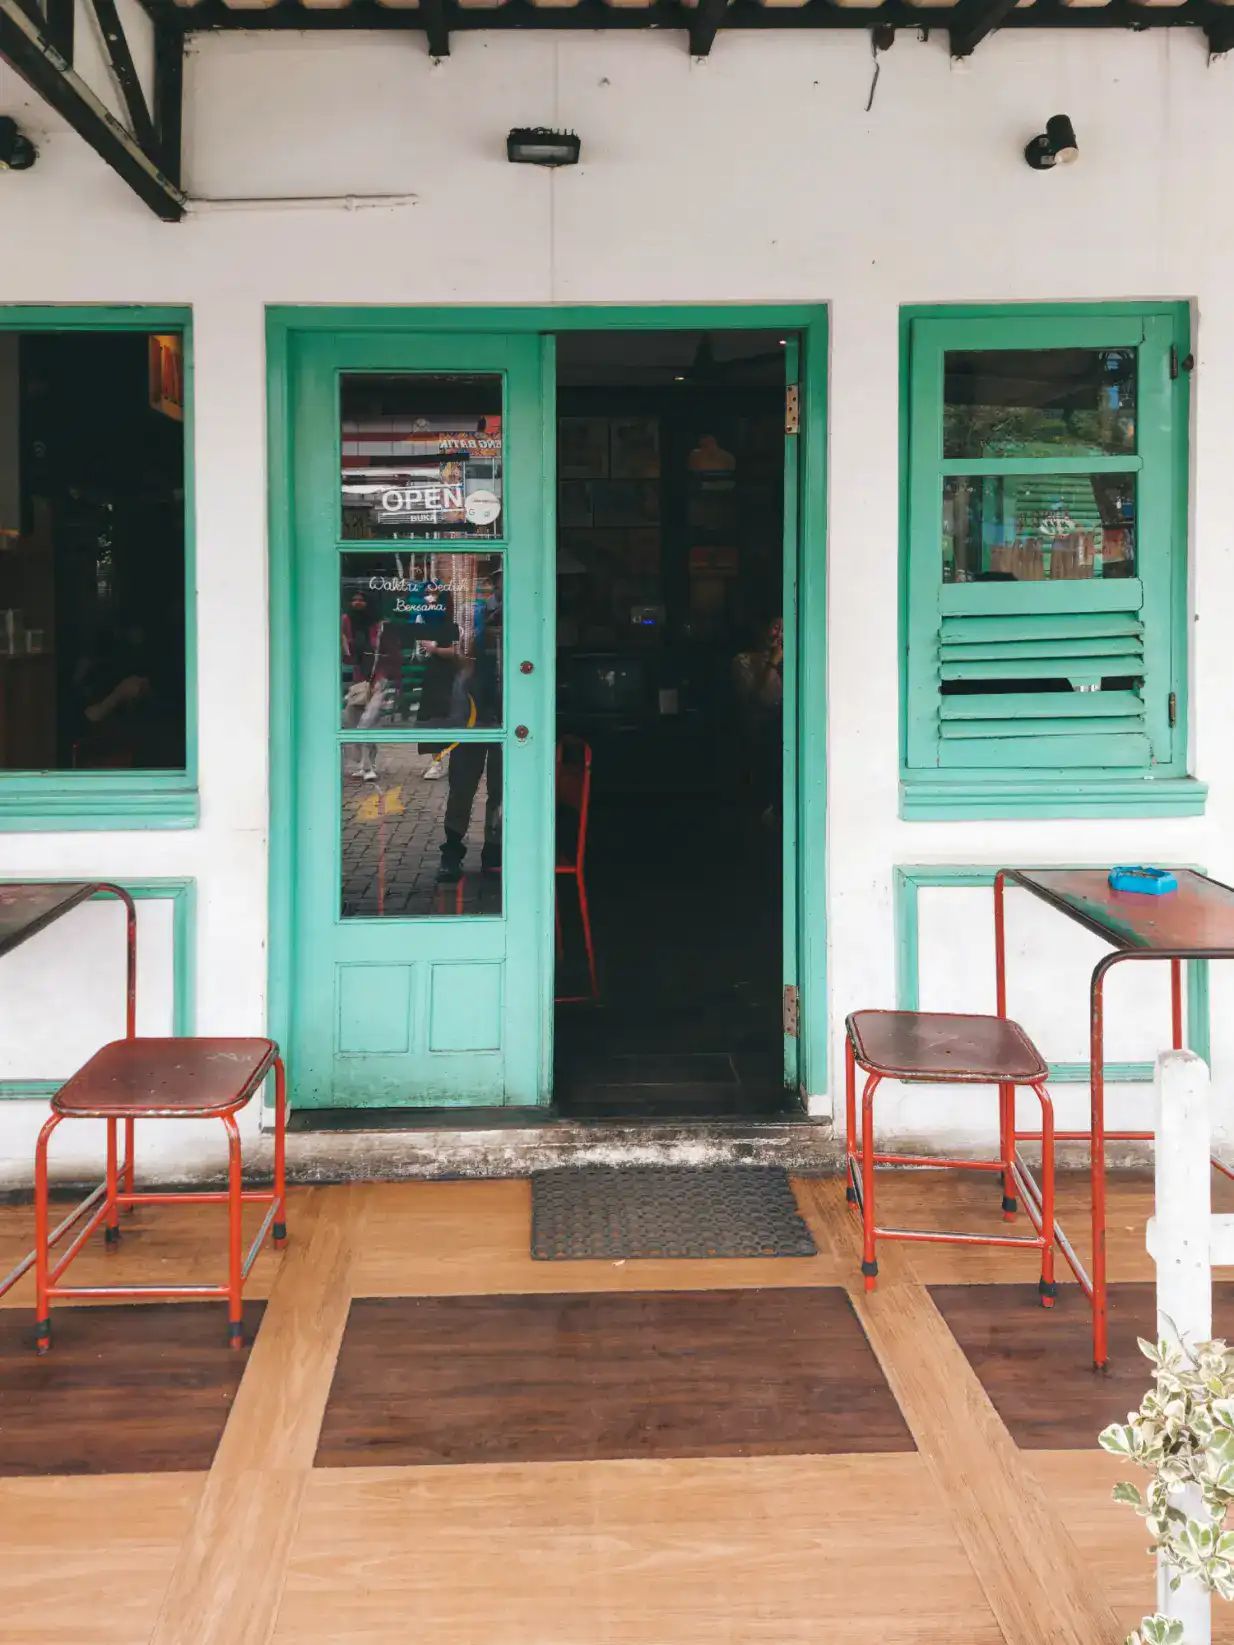 Retro: Kedai Es Teh Jaya Abadi, Bogor 